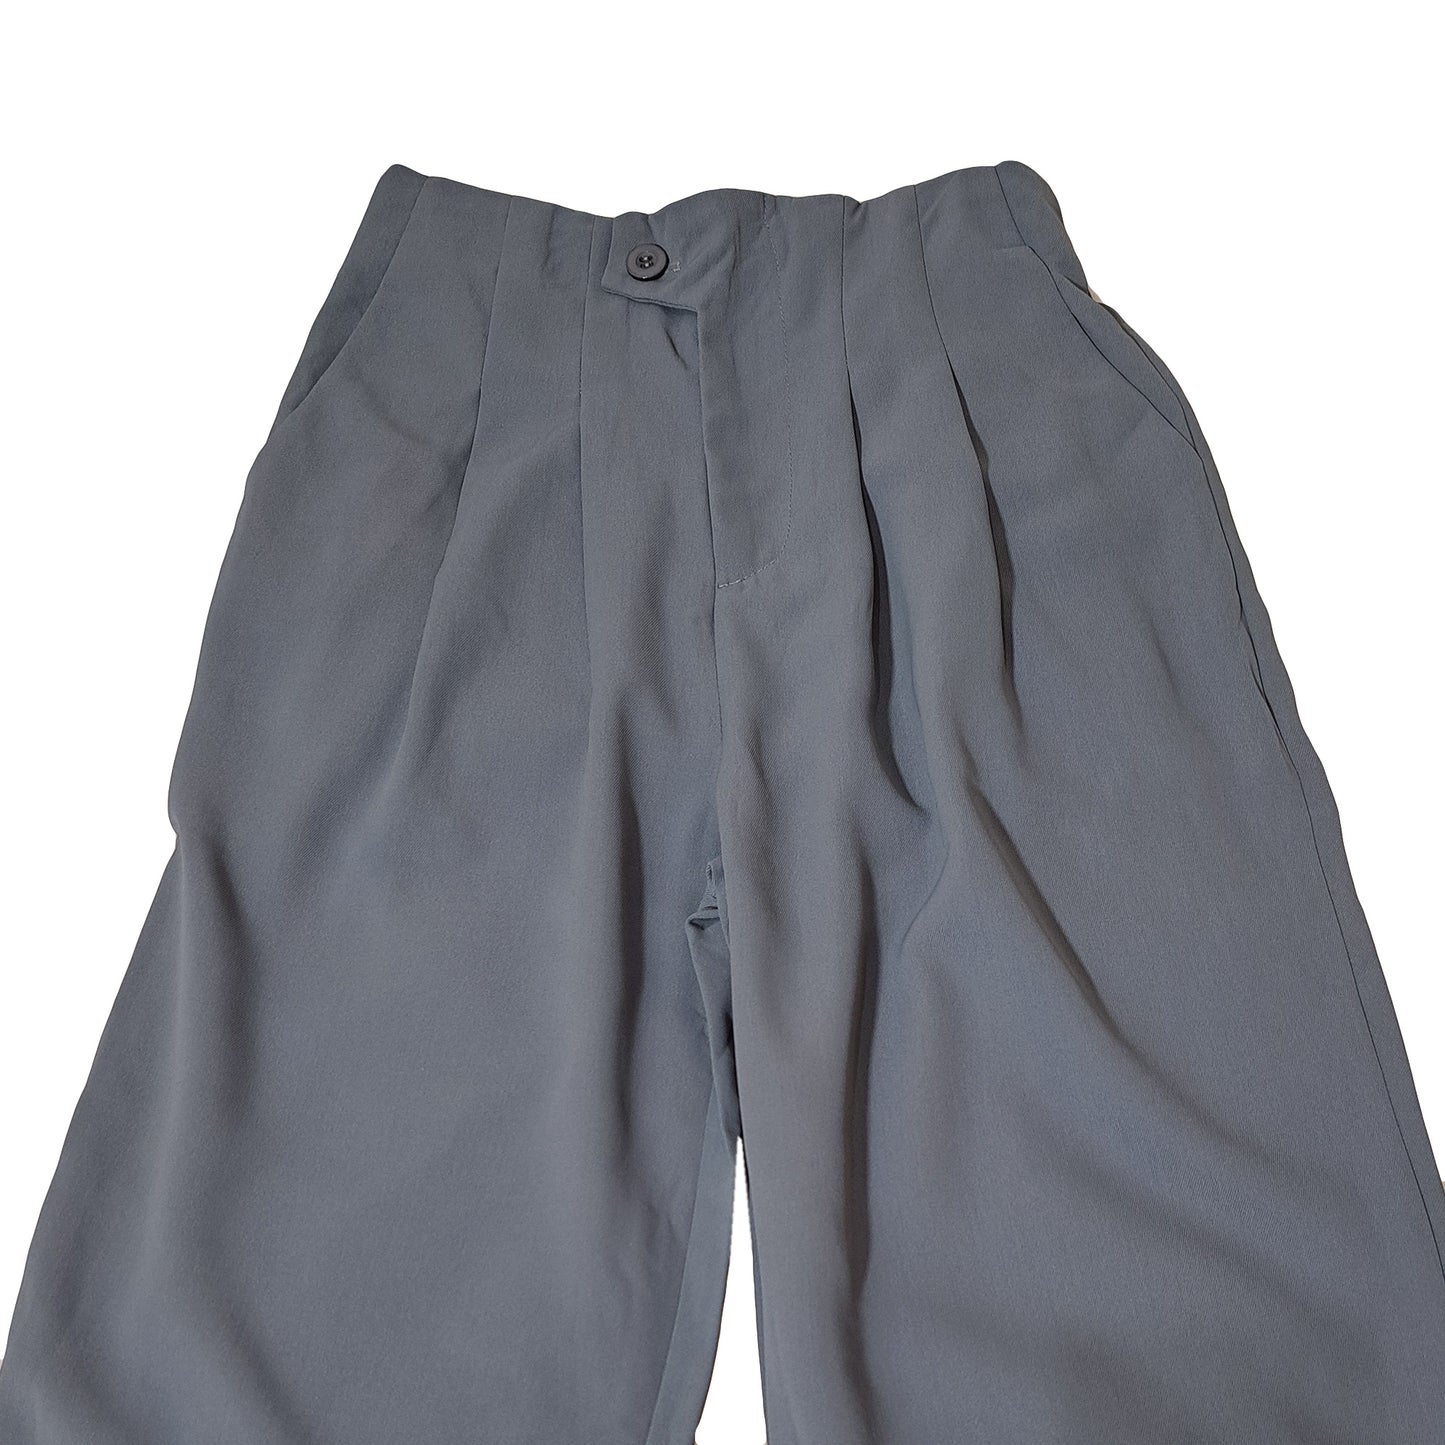 Sara High Waist Trouser Pants for Women - Slacks Pants, Candy Pants